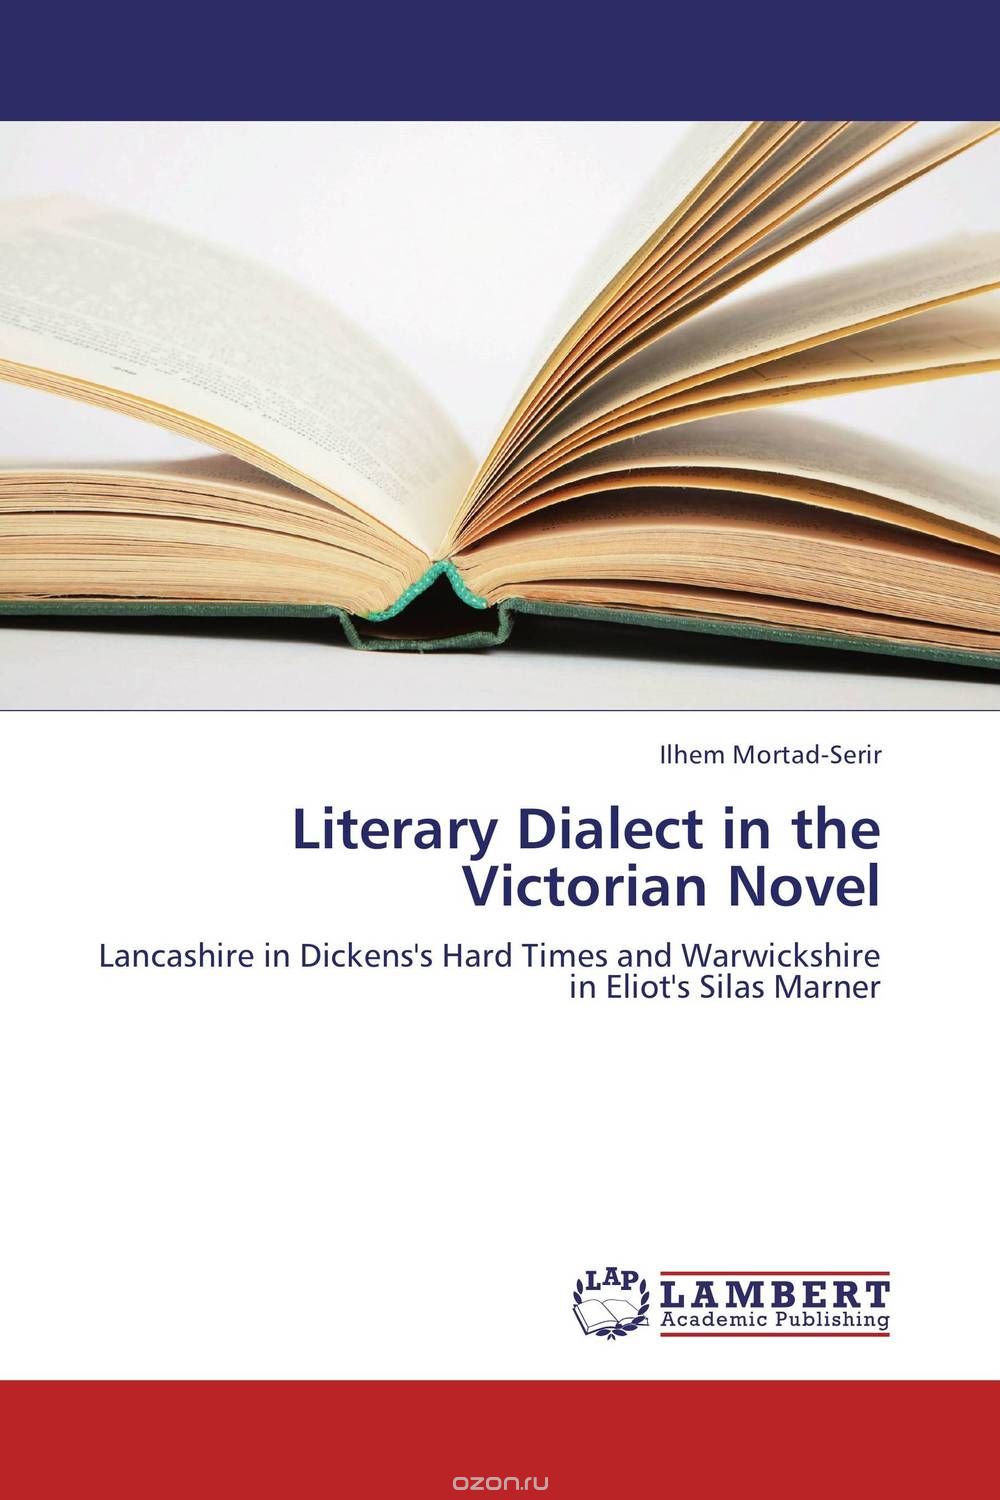 Скачать книгу "Literary Dialect in the Victorian Novel"